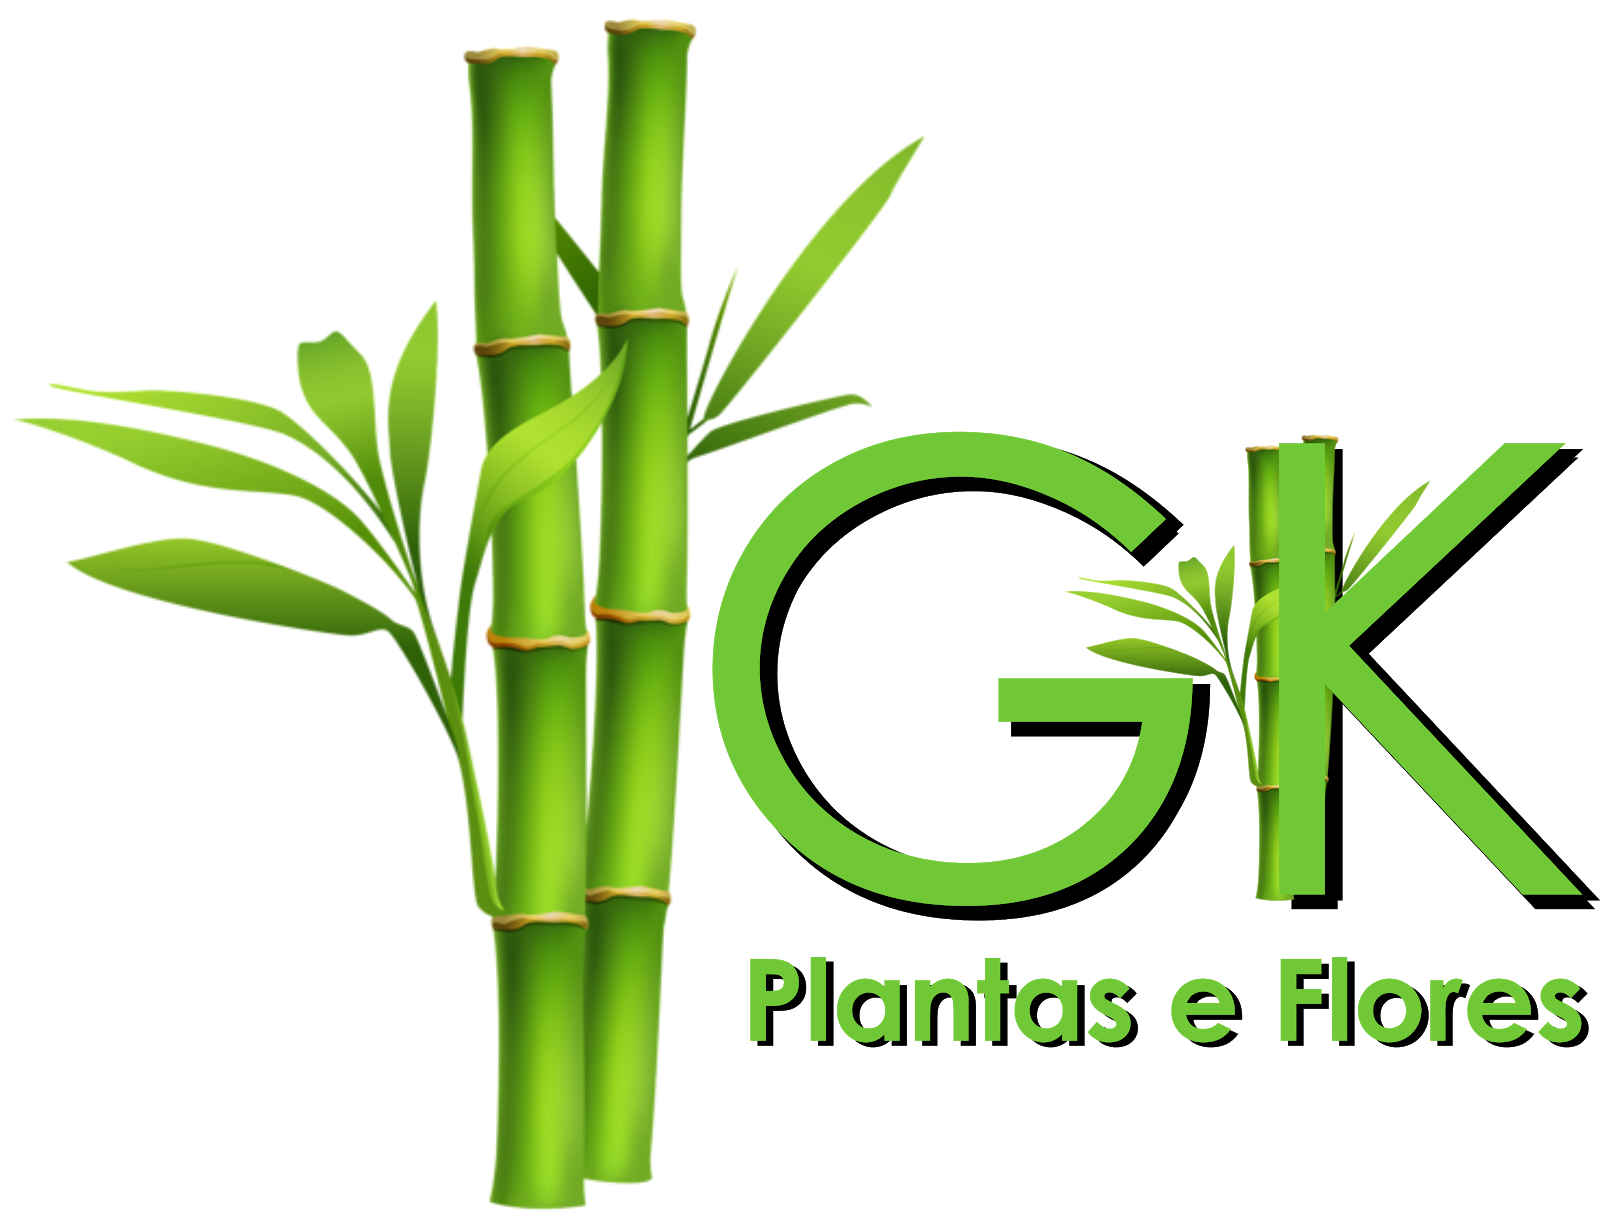 GK Plantas e Flores